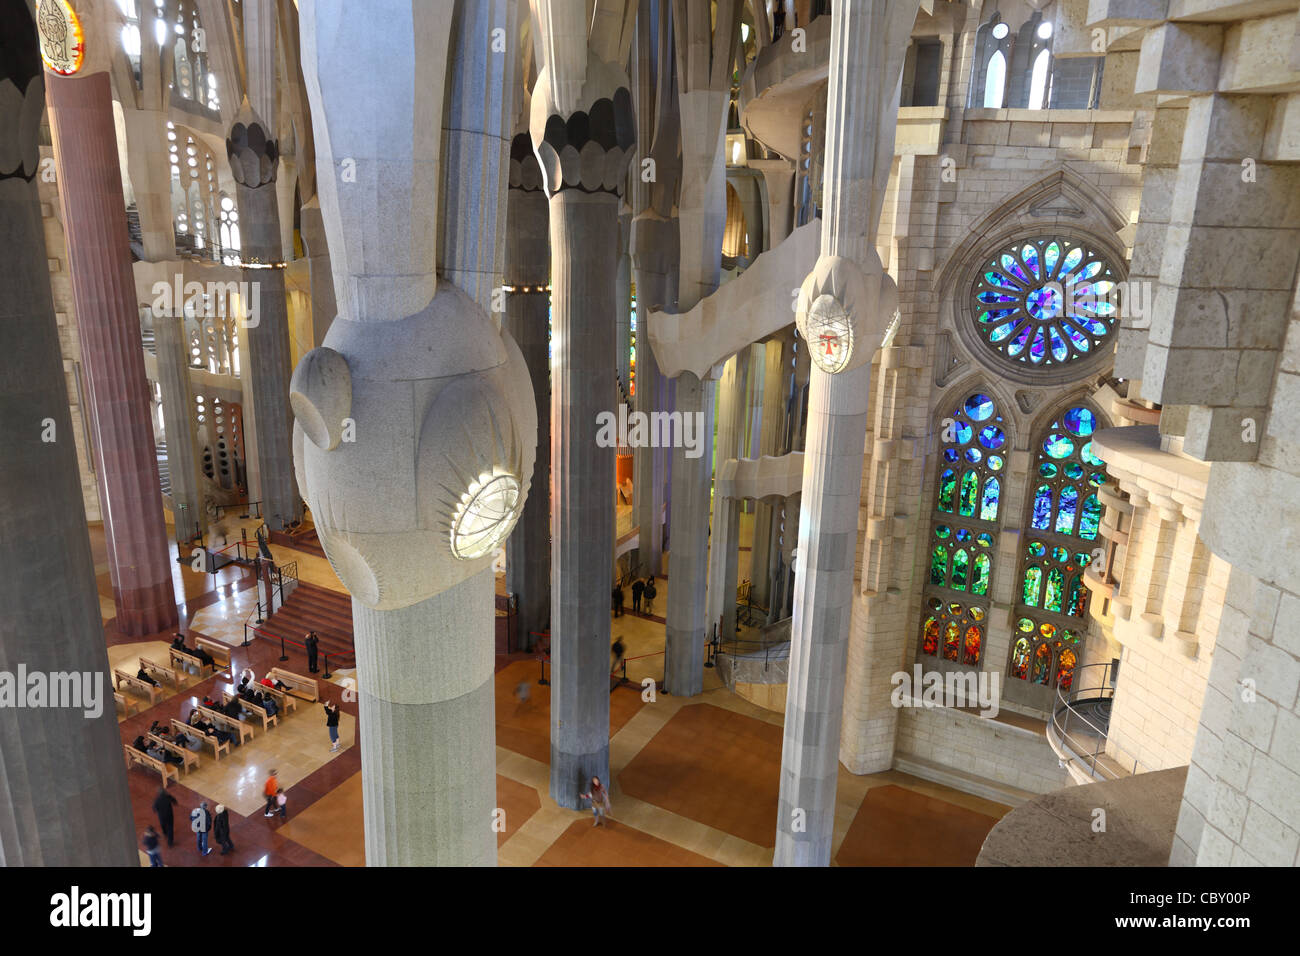 Architecture detail of windows, ceiling and pillars in La Sagrada Familia, Barcelona by Gaudi Stock Photo